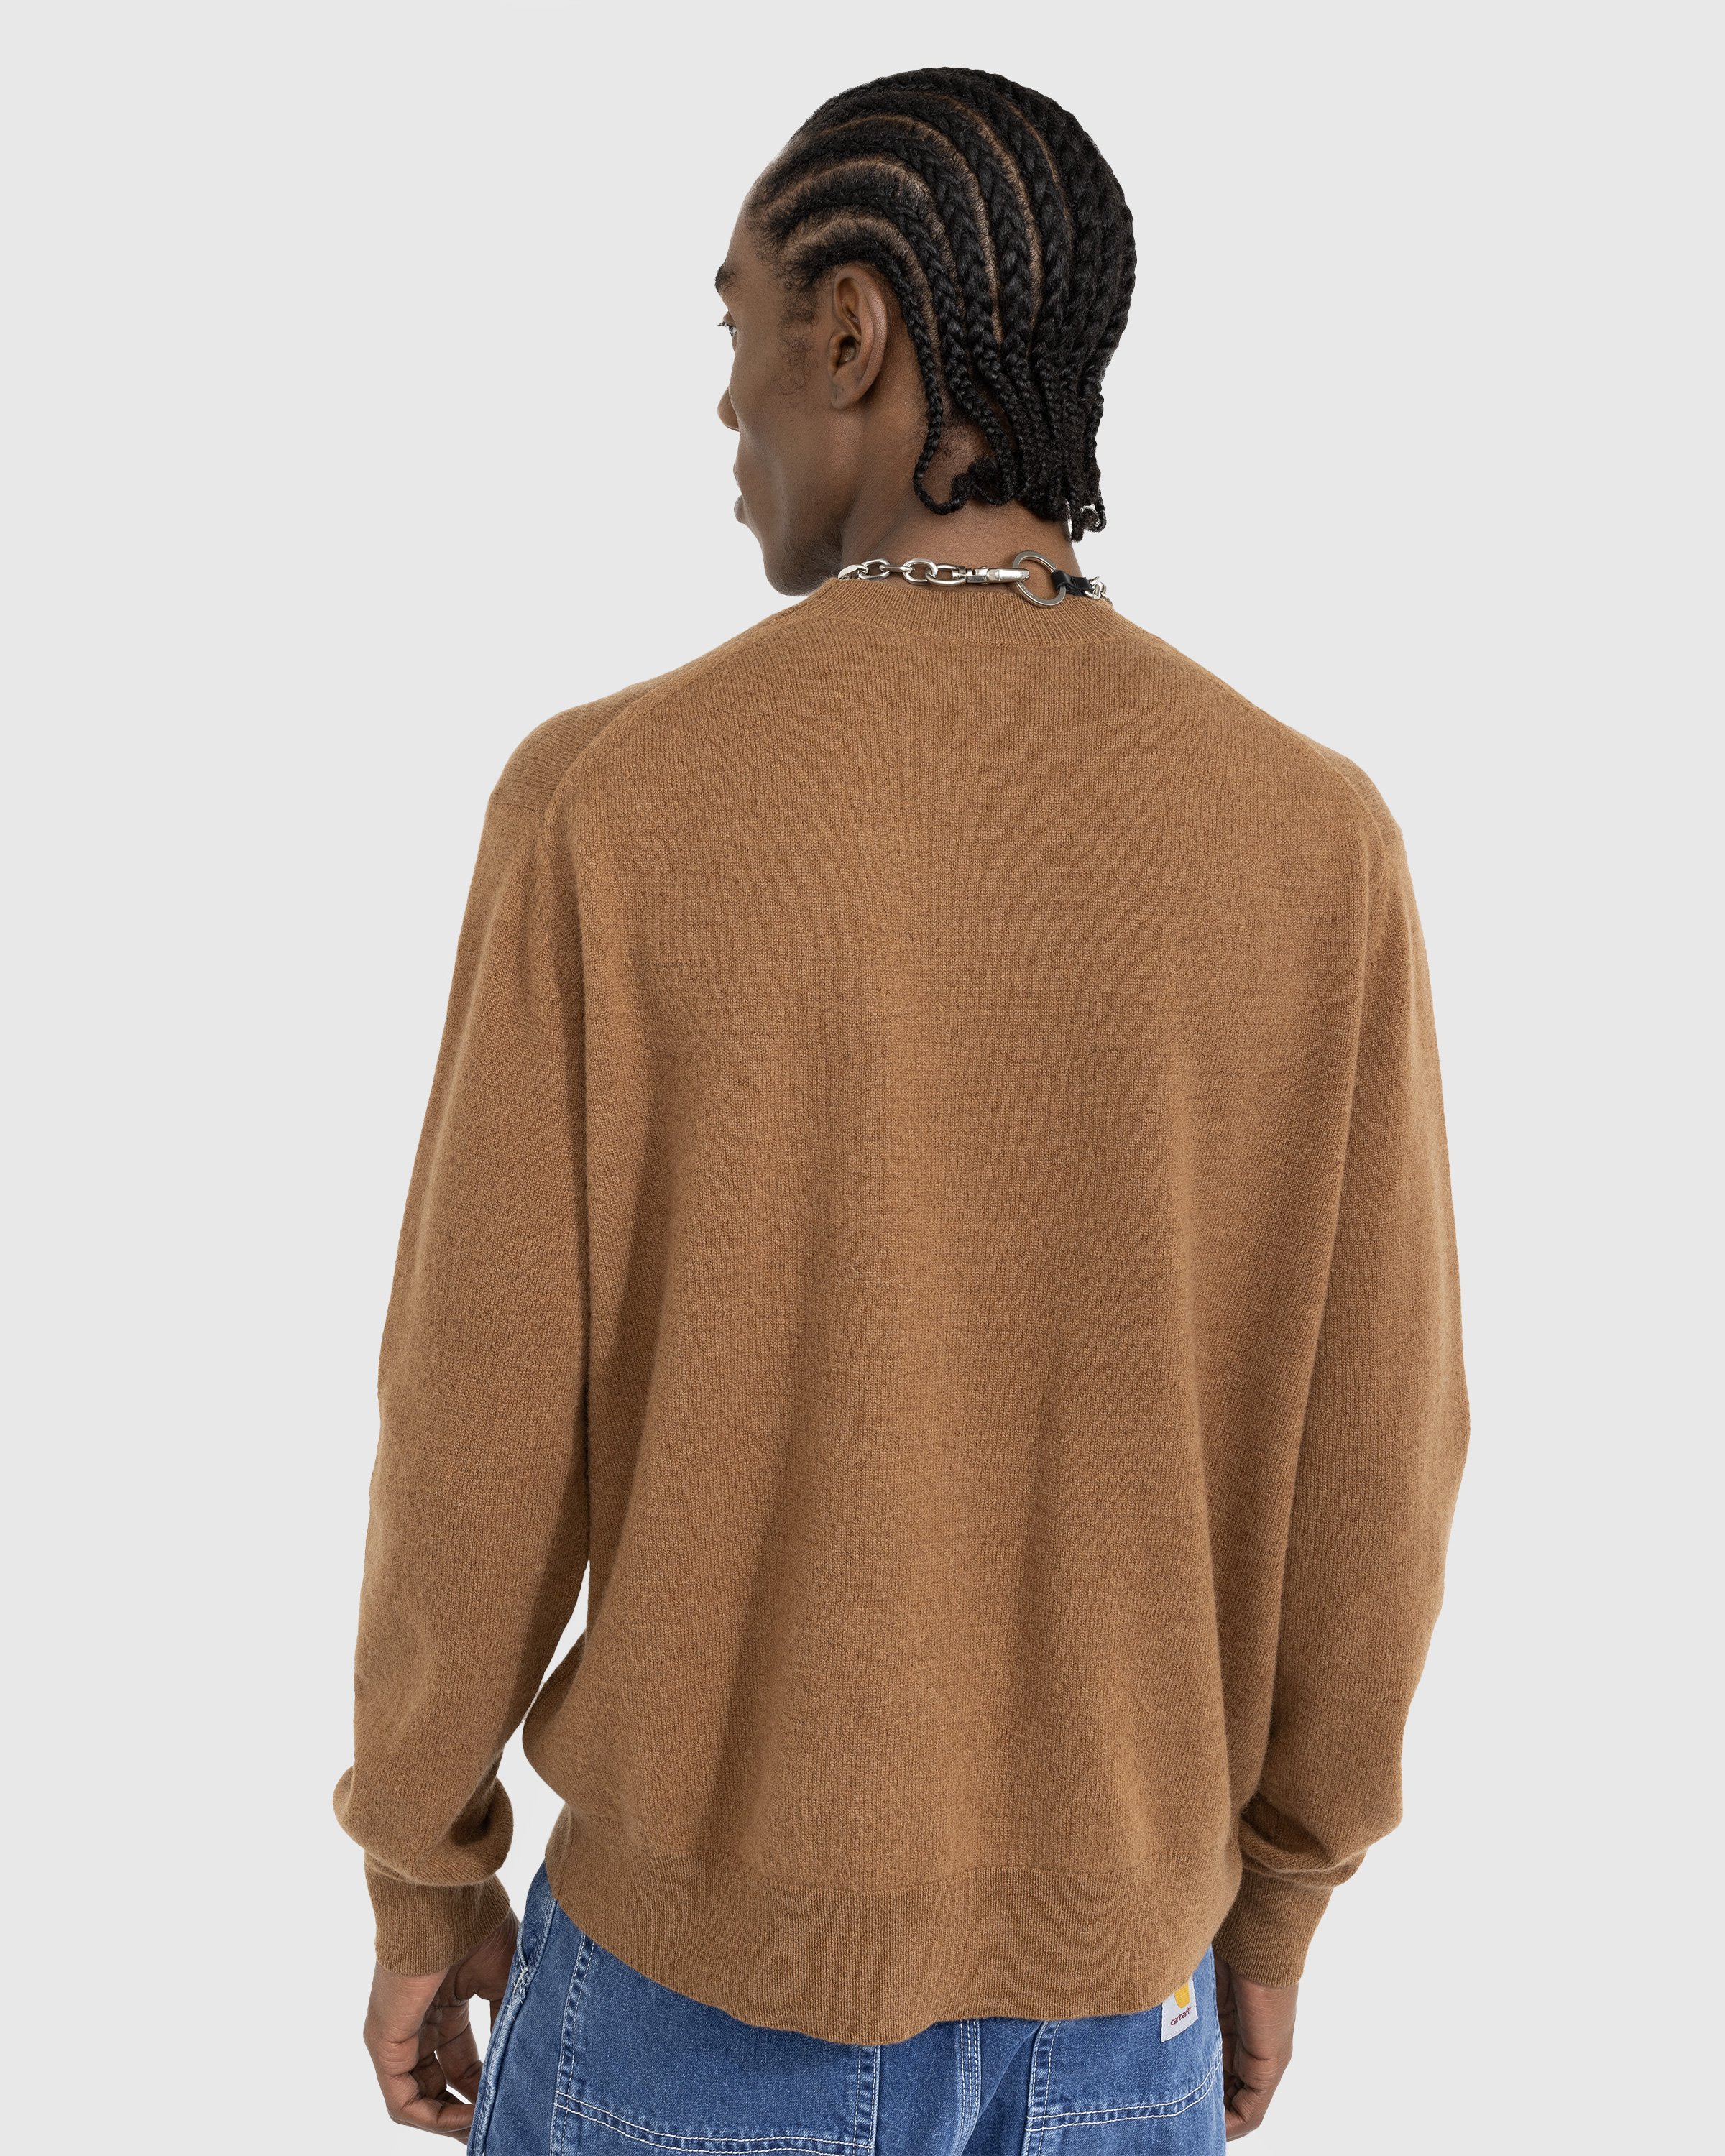 Acne Studios - Wool Crewneck Sweater Toffee Brown - Clothing - Brown - Image 3